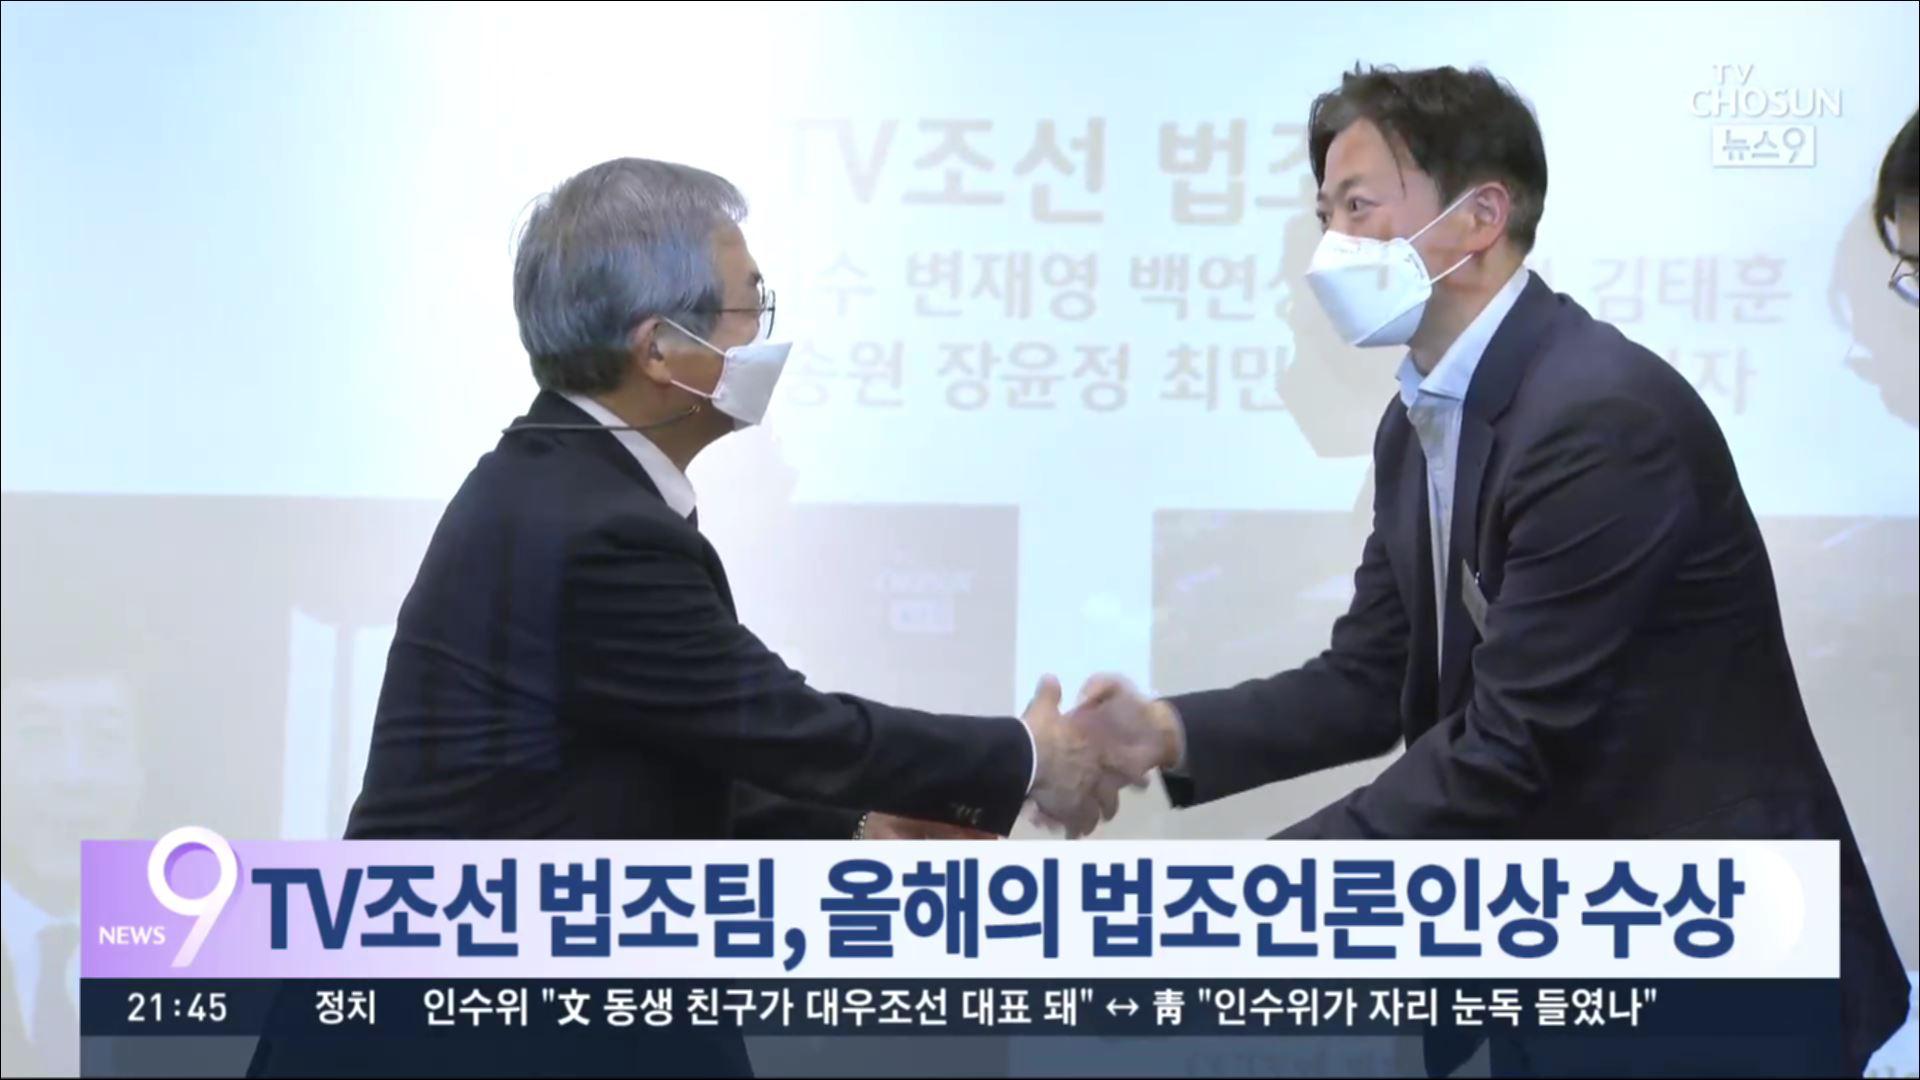 TV조선 법조팀, 올해의 법조언론인상 수상